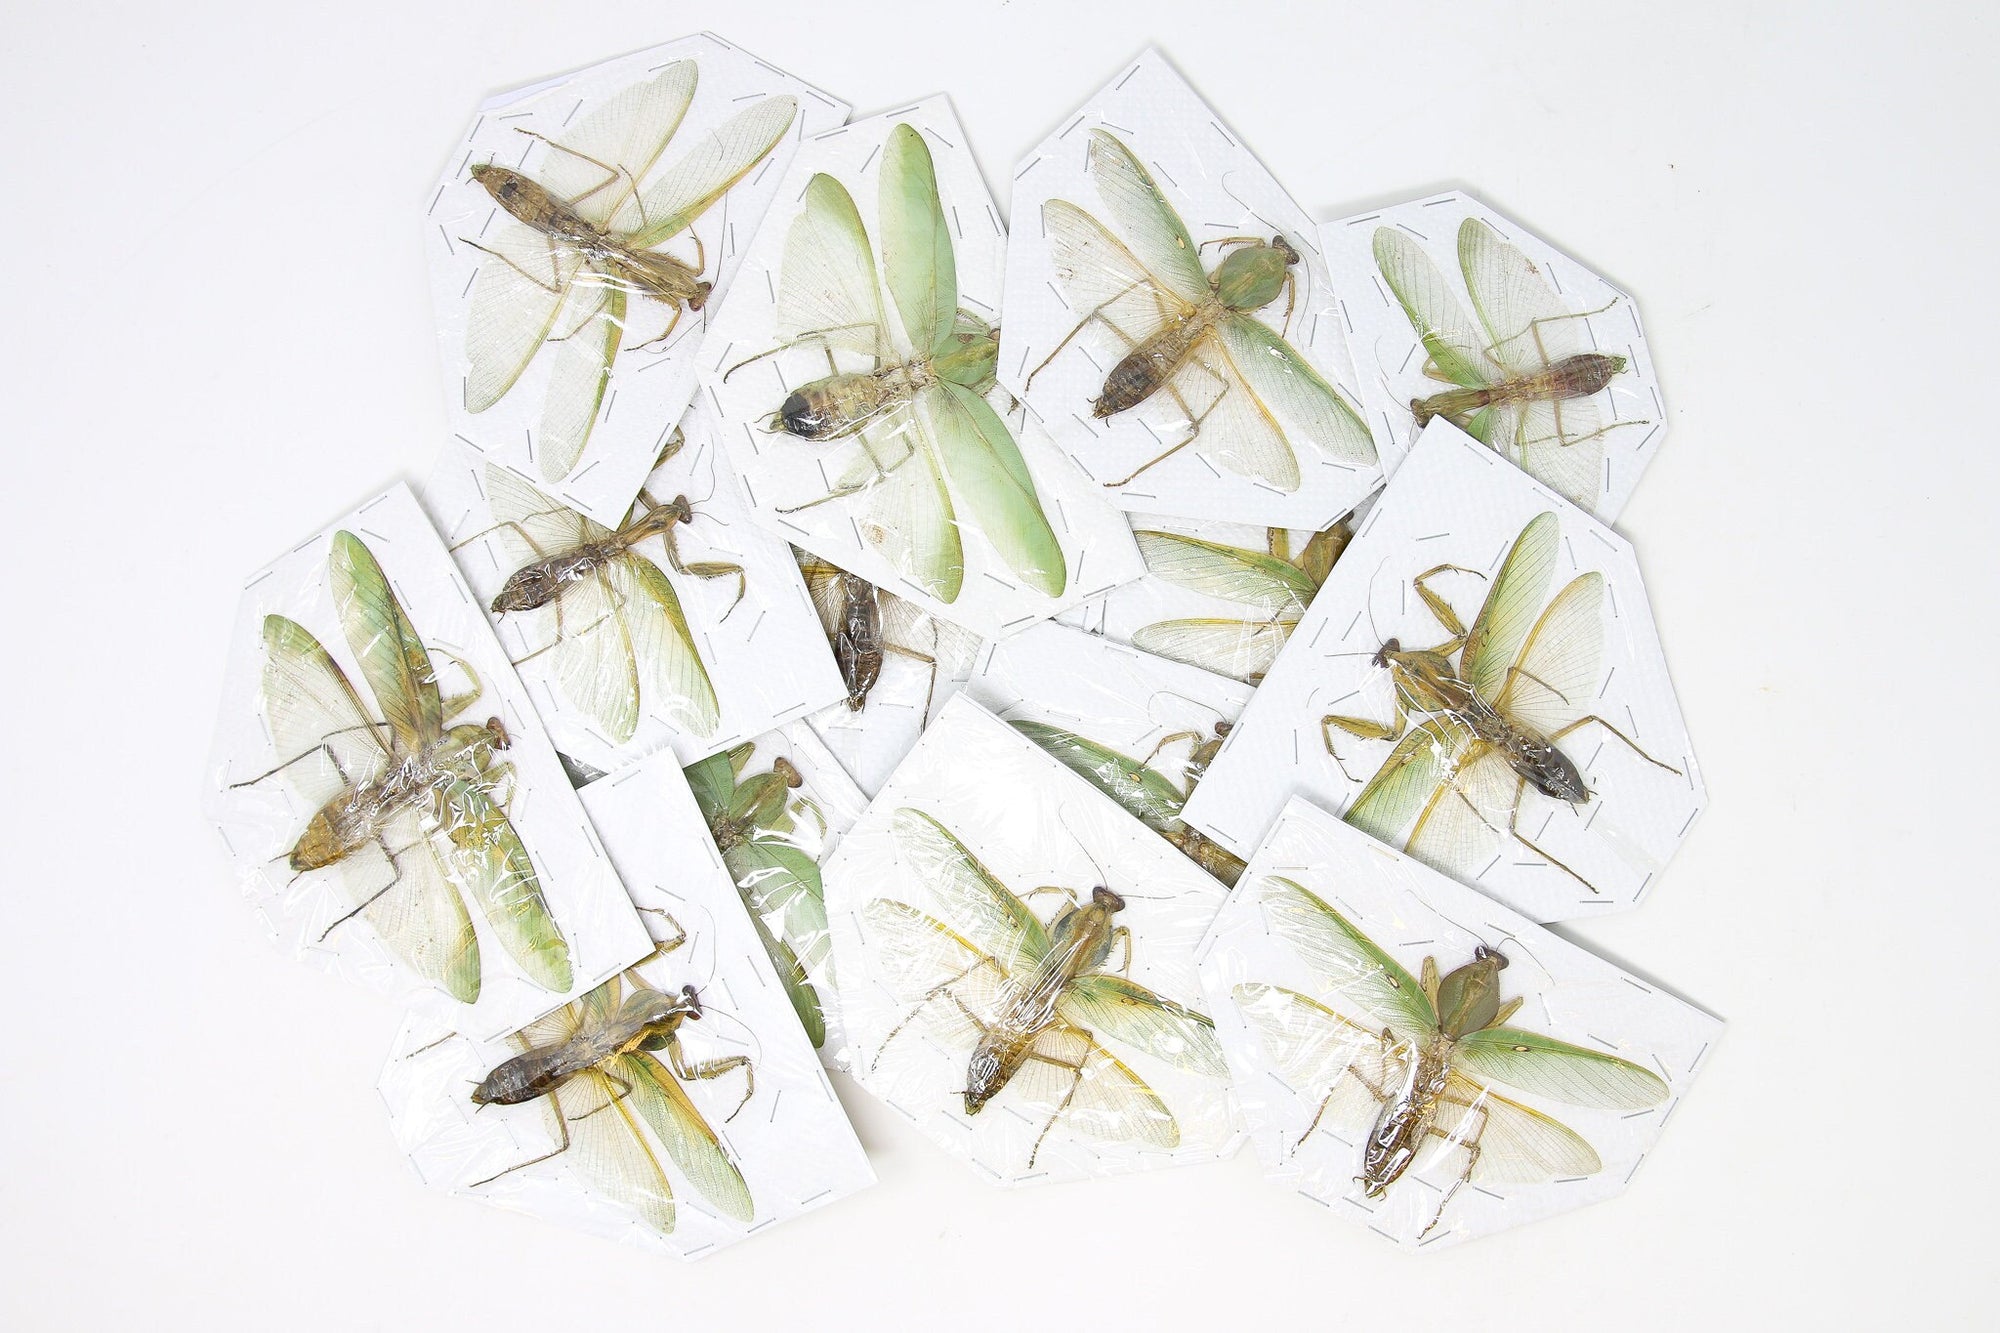 Pack of 10 Green Praying Mantis, A1 Spread Specimens, Taxidermy Entomology